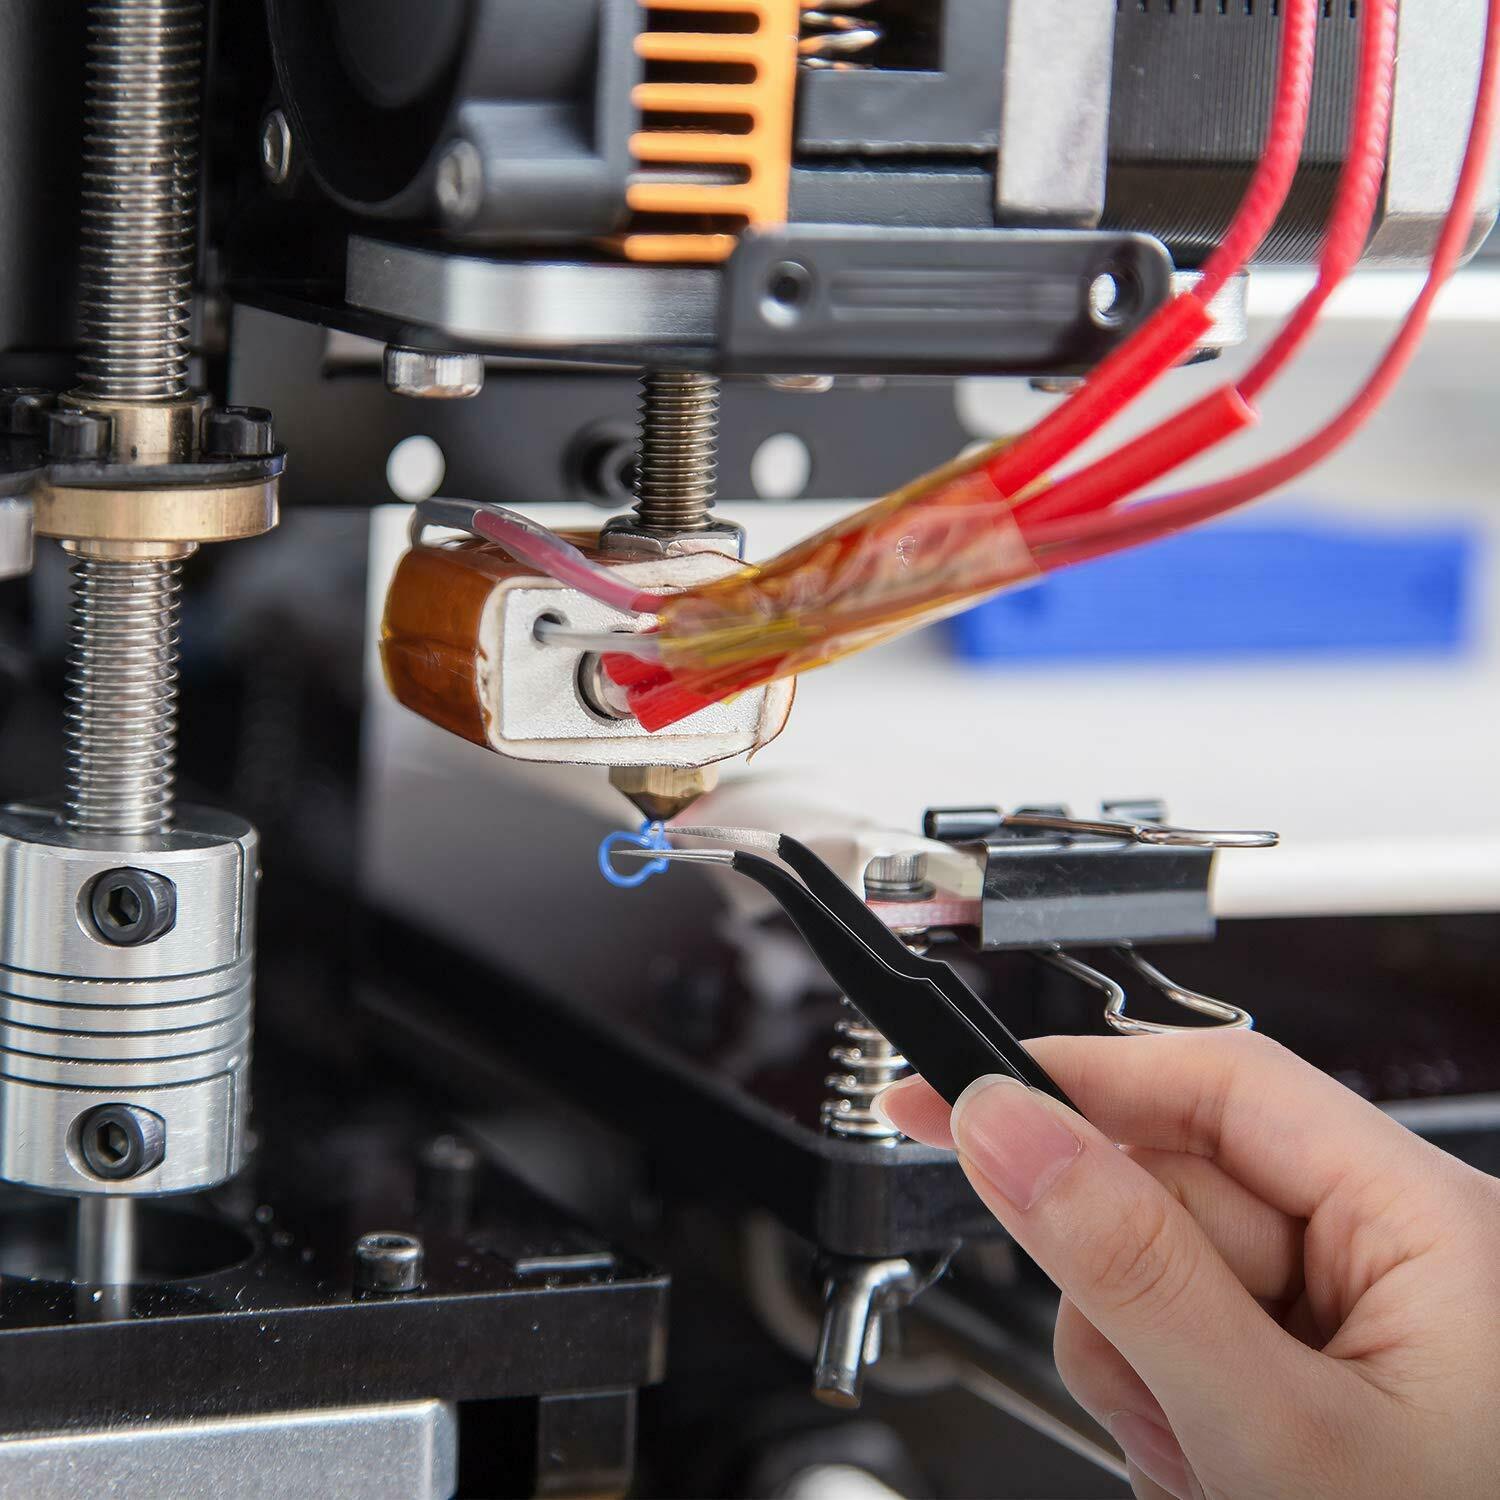 34Pcs MK10 3D Printer Accessories Kit Essential Tools for 3D Printer Enthusiasts